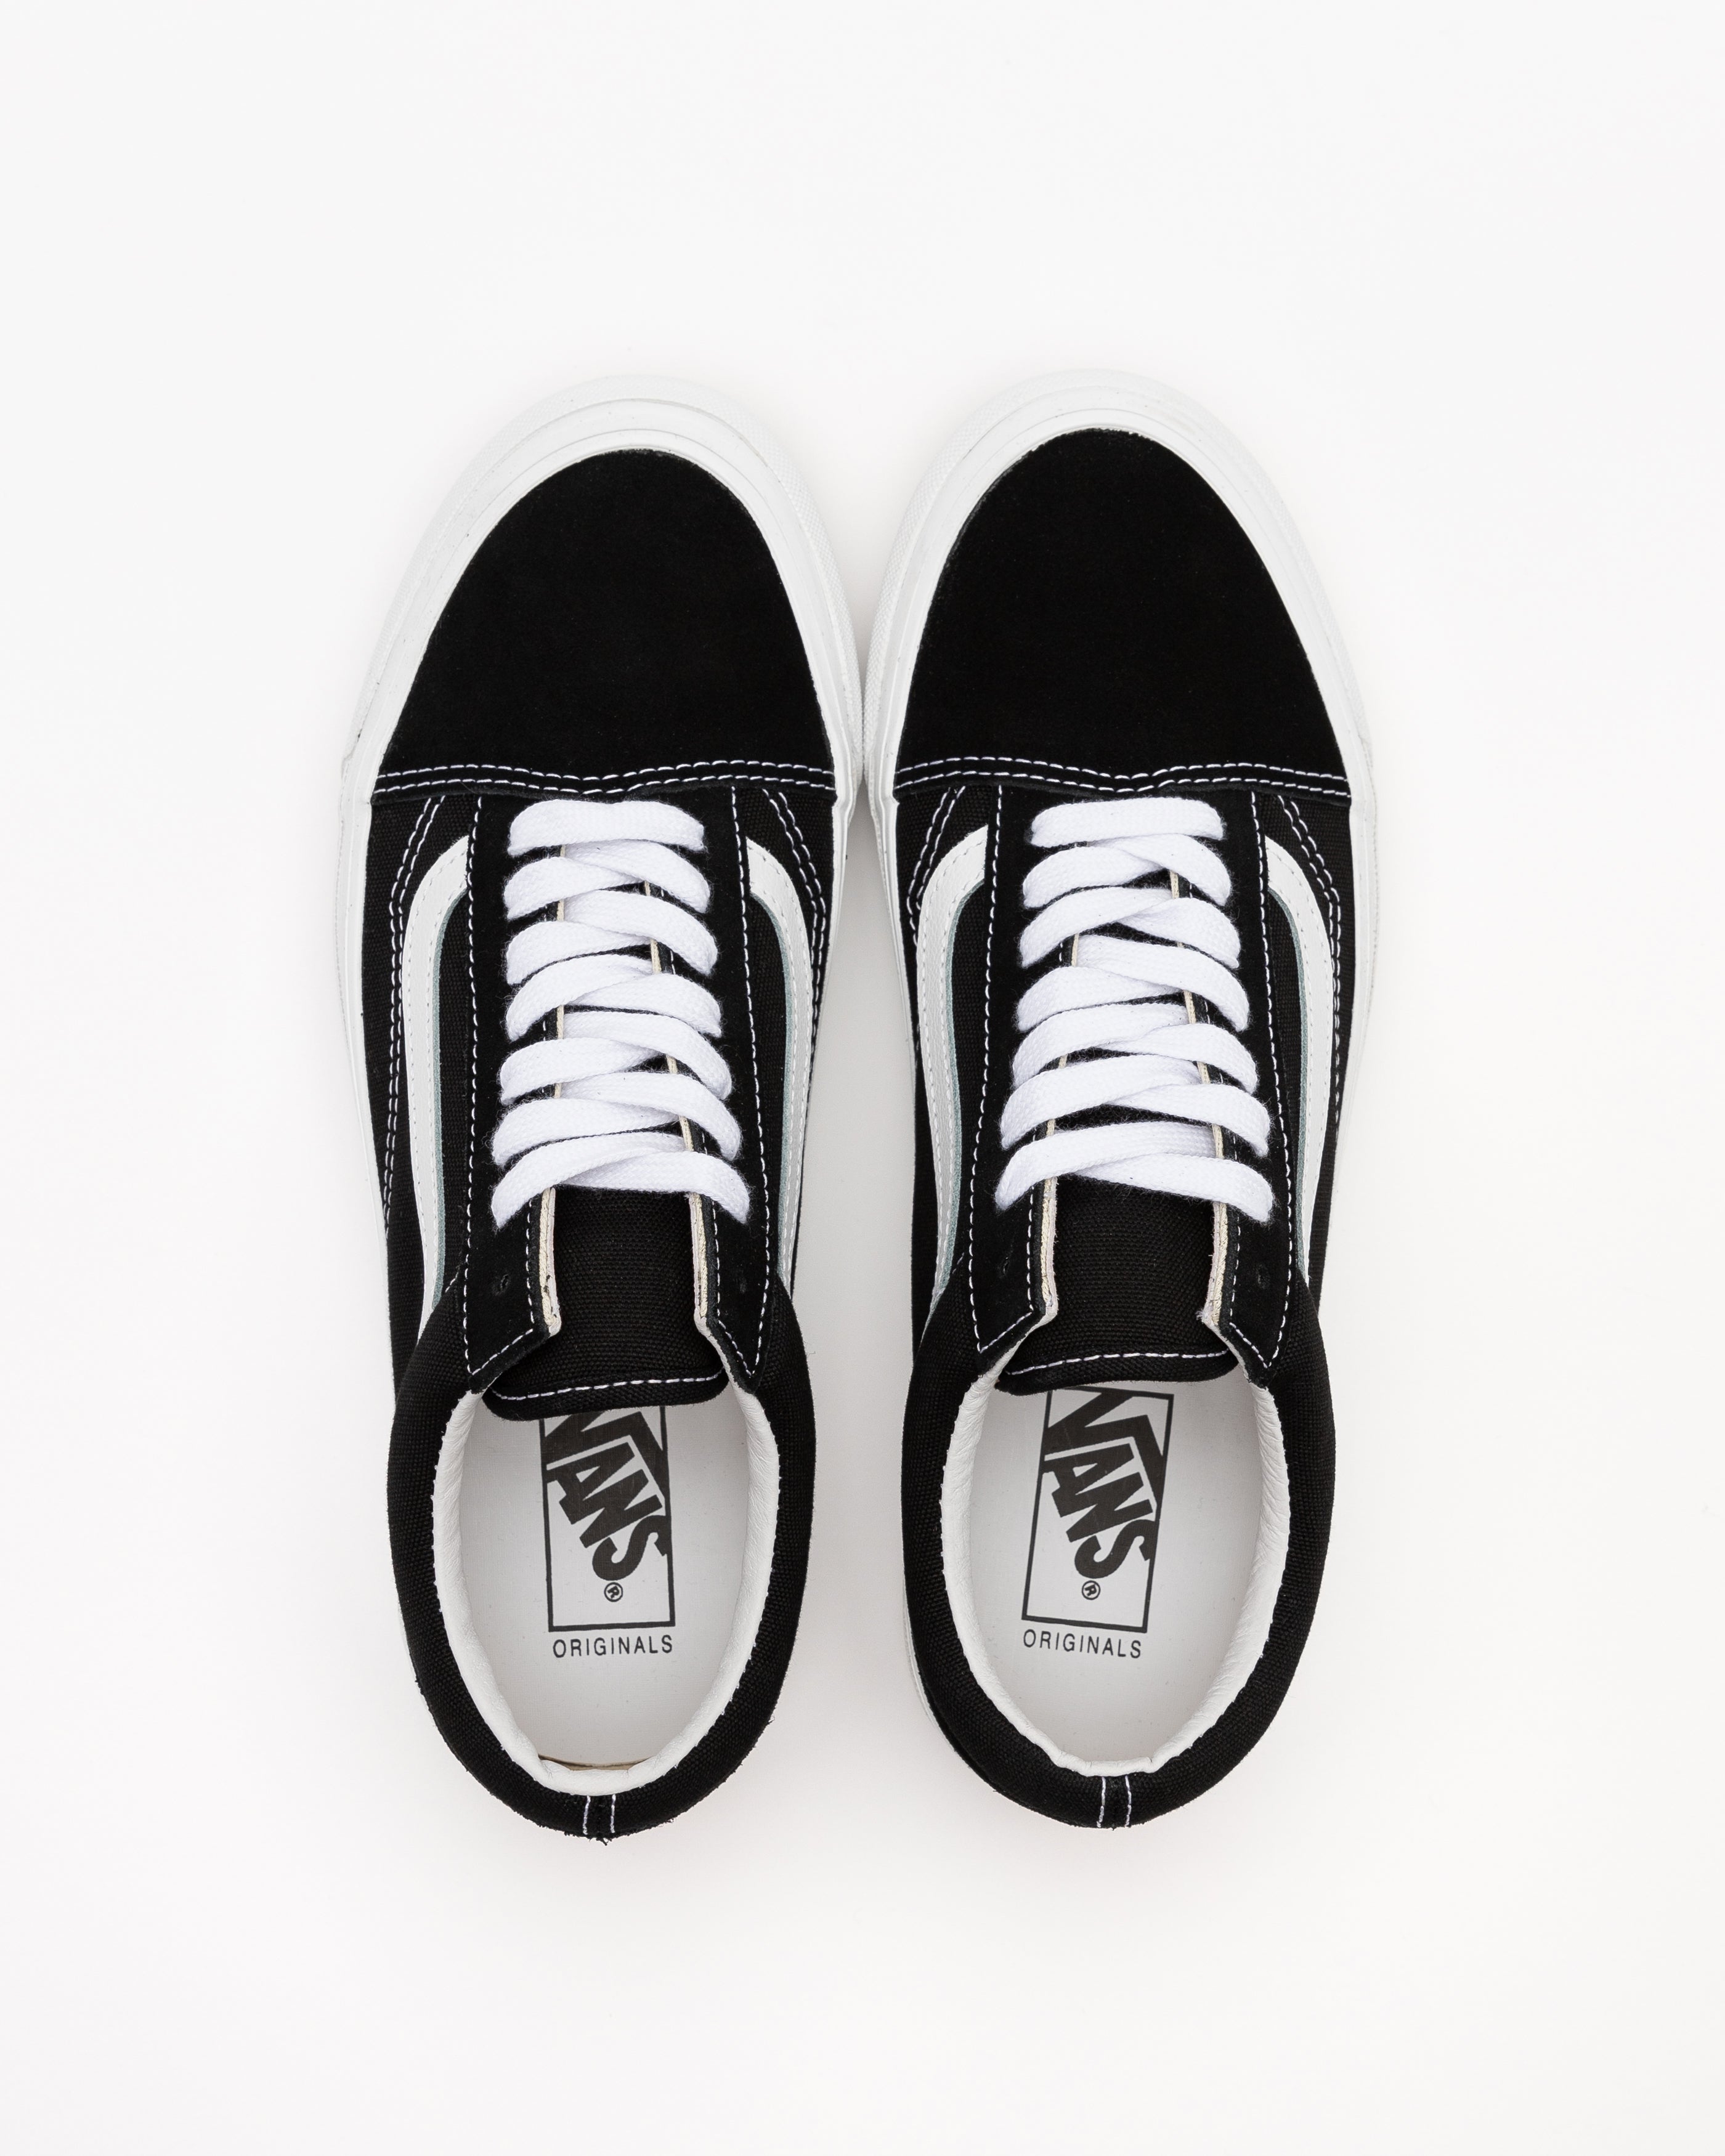 OG Old Skool LX Sneakers in Black/White